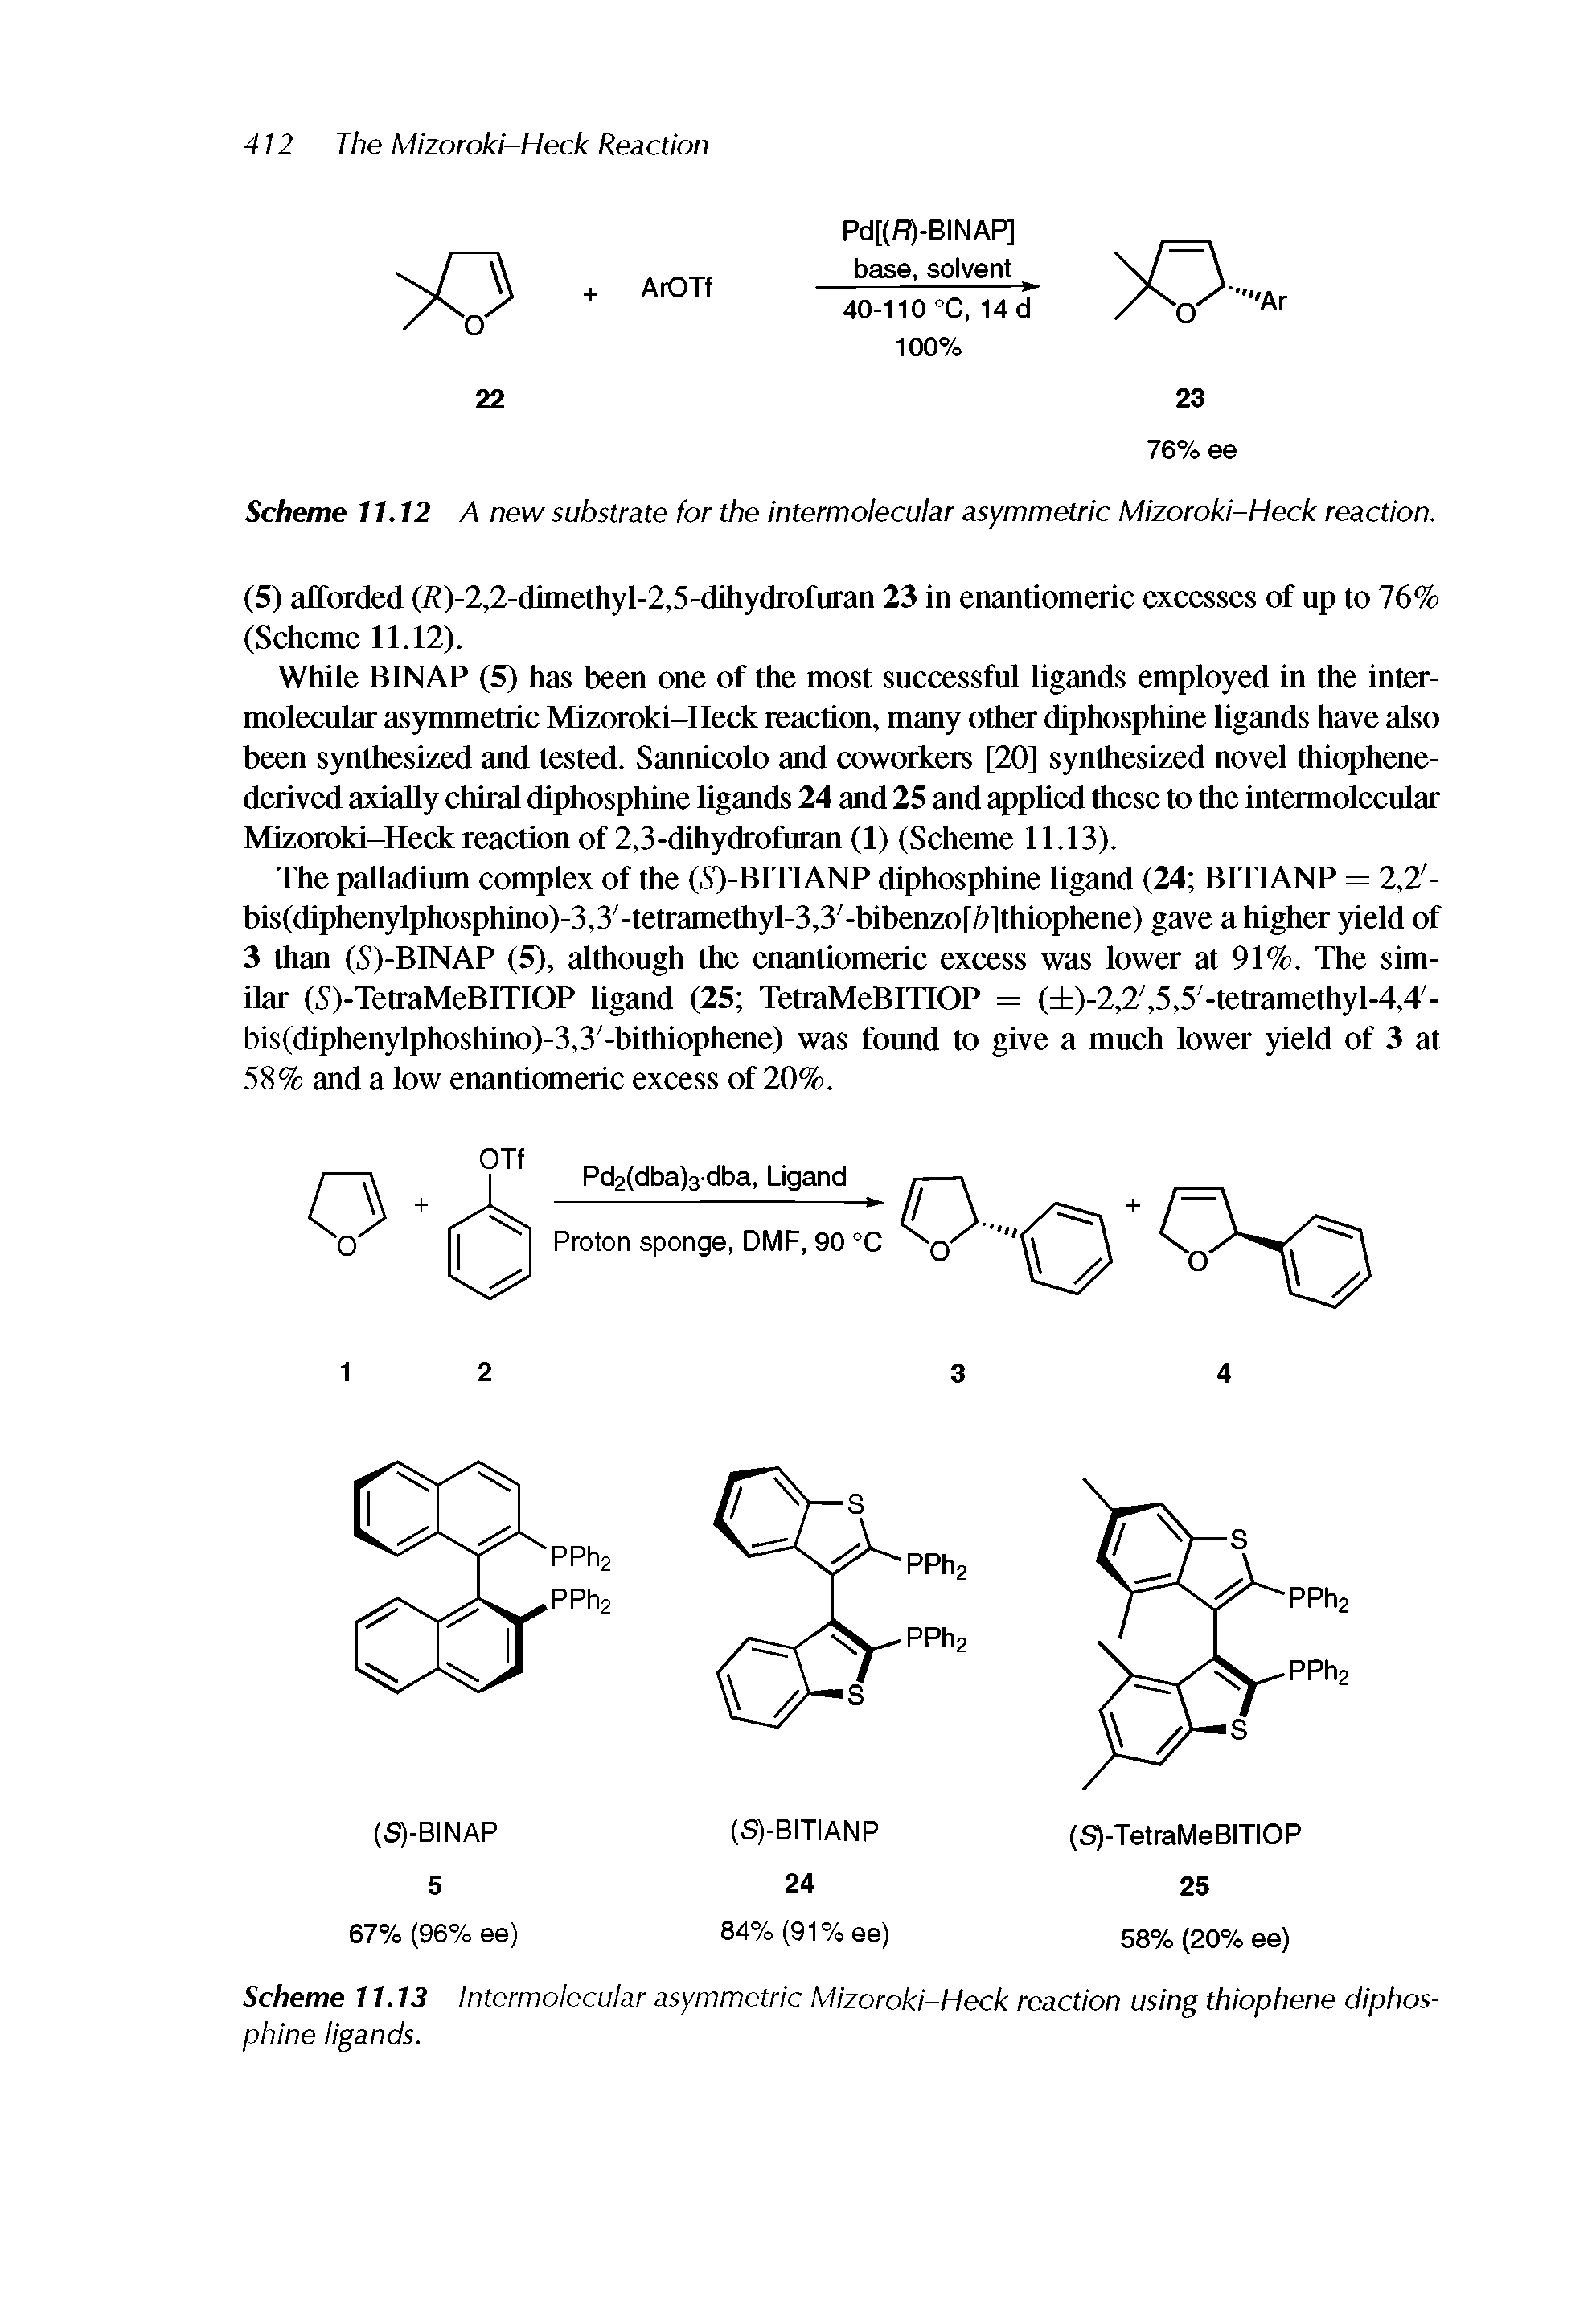 Scheme 11.13 Intermolecular asymmetric Mizoroki-Heck reaction using thiophene diphosphine ligands.